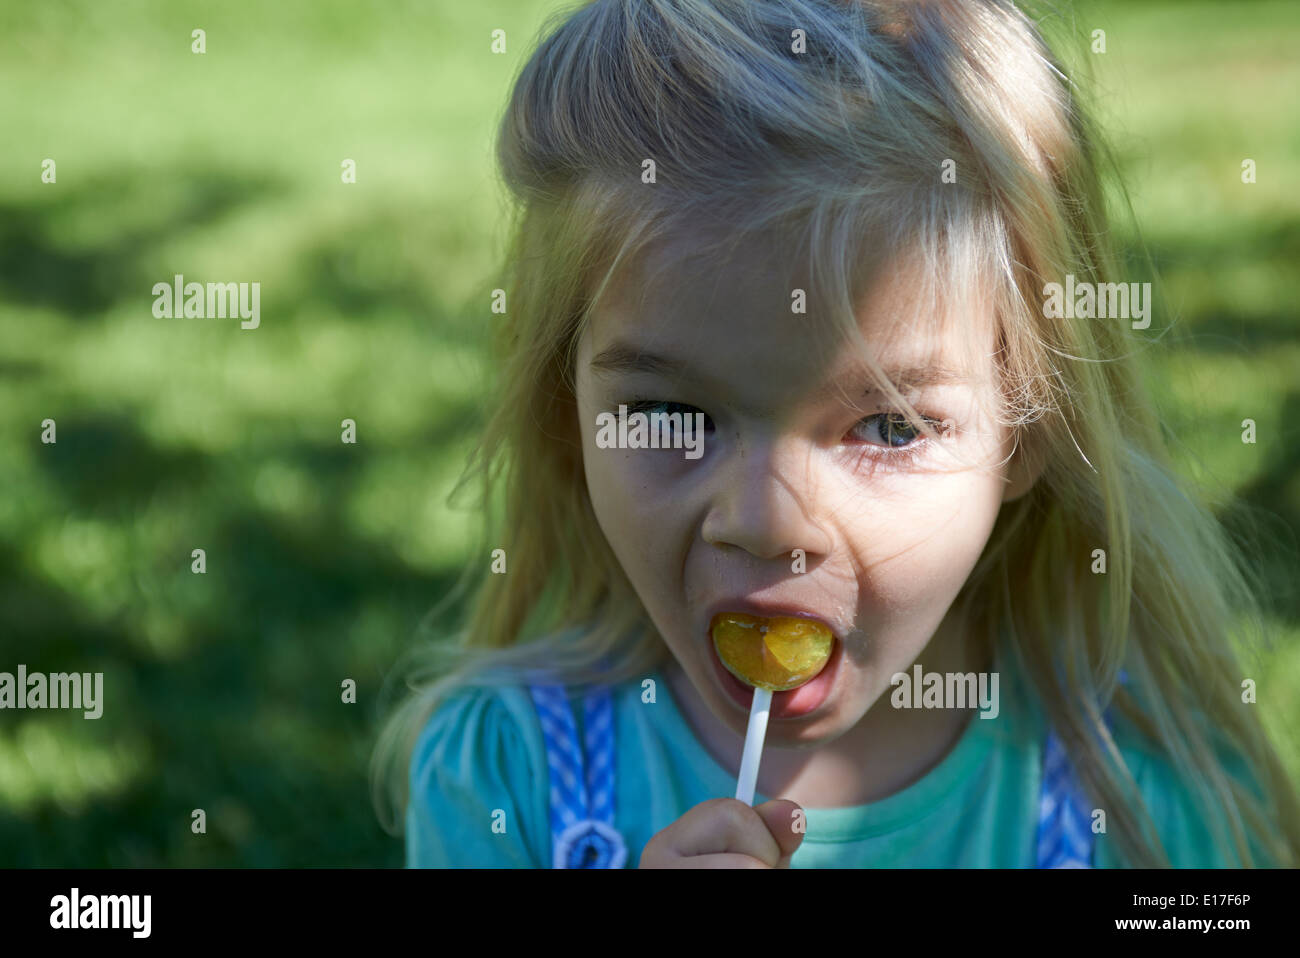 Little child blond girl licking lollipop outside in garden, portrait Stock Photo